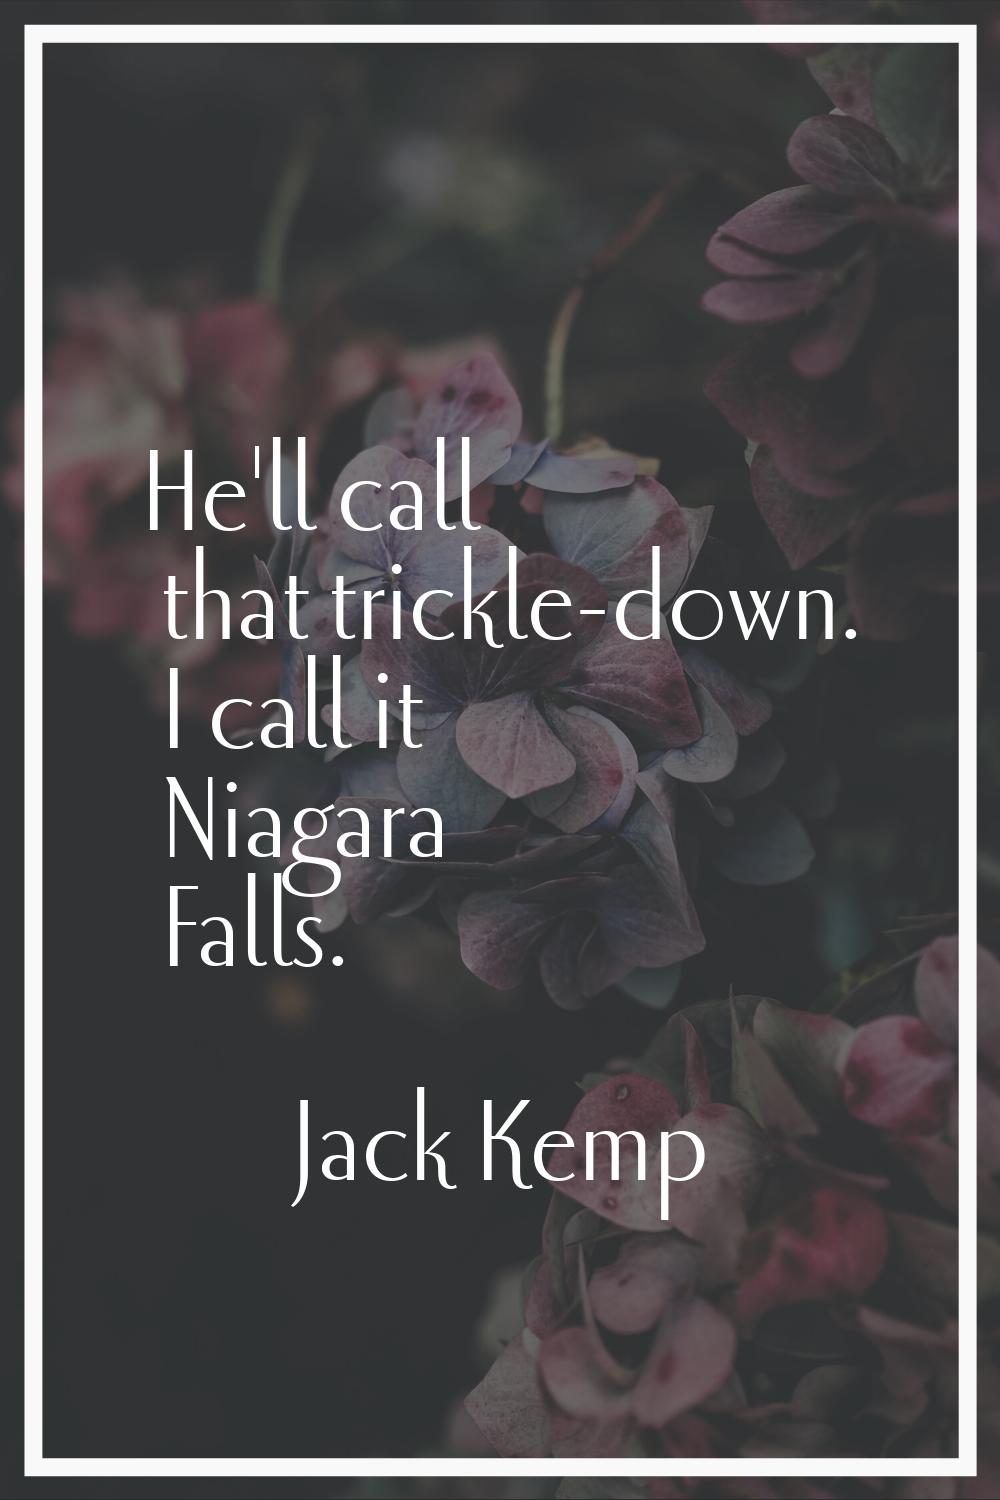 He'll call that trickle-down. I call it Niagara Falls.